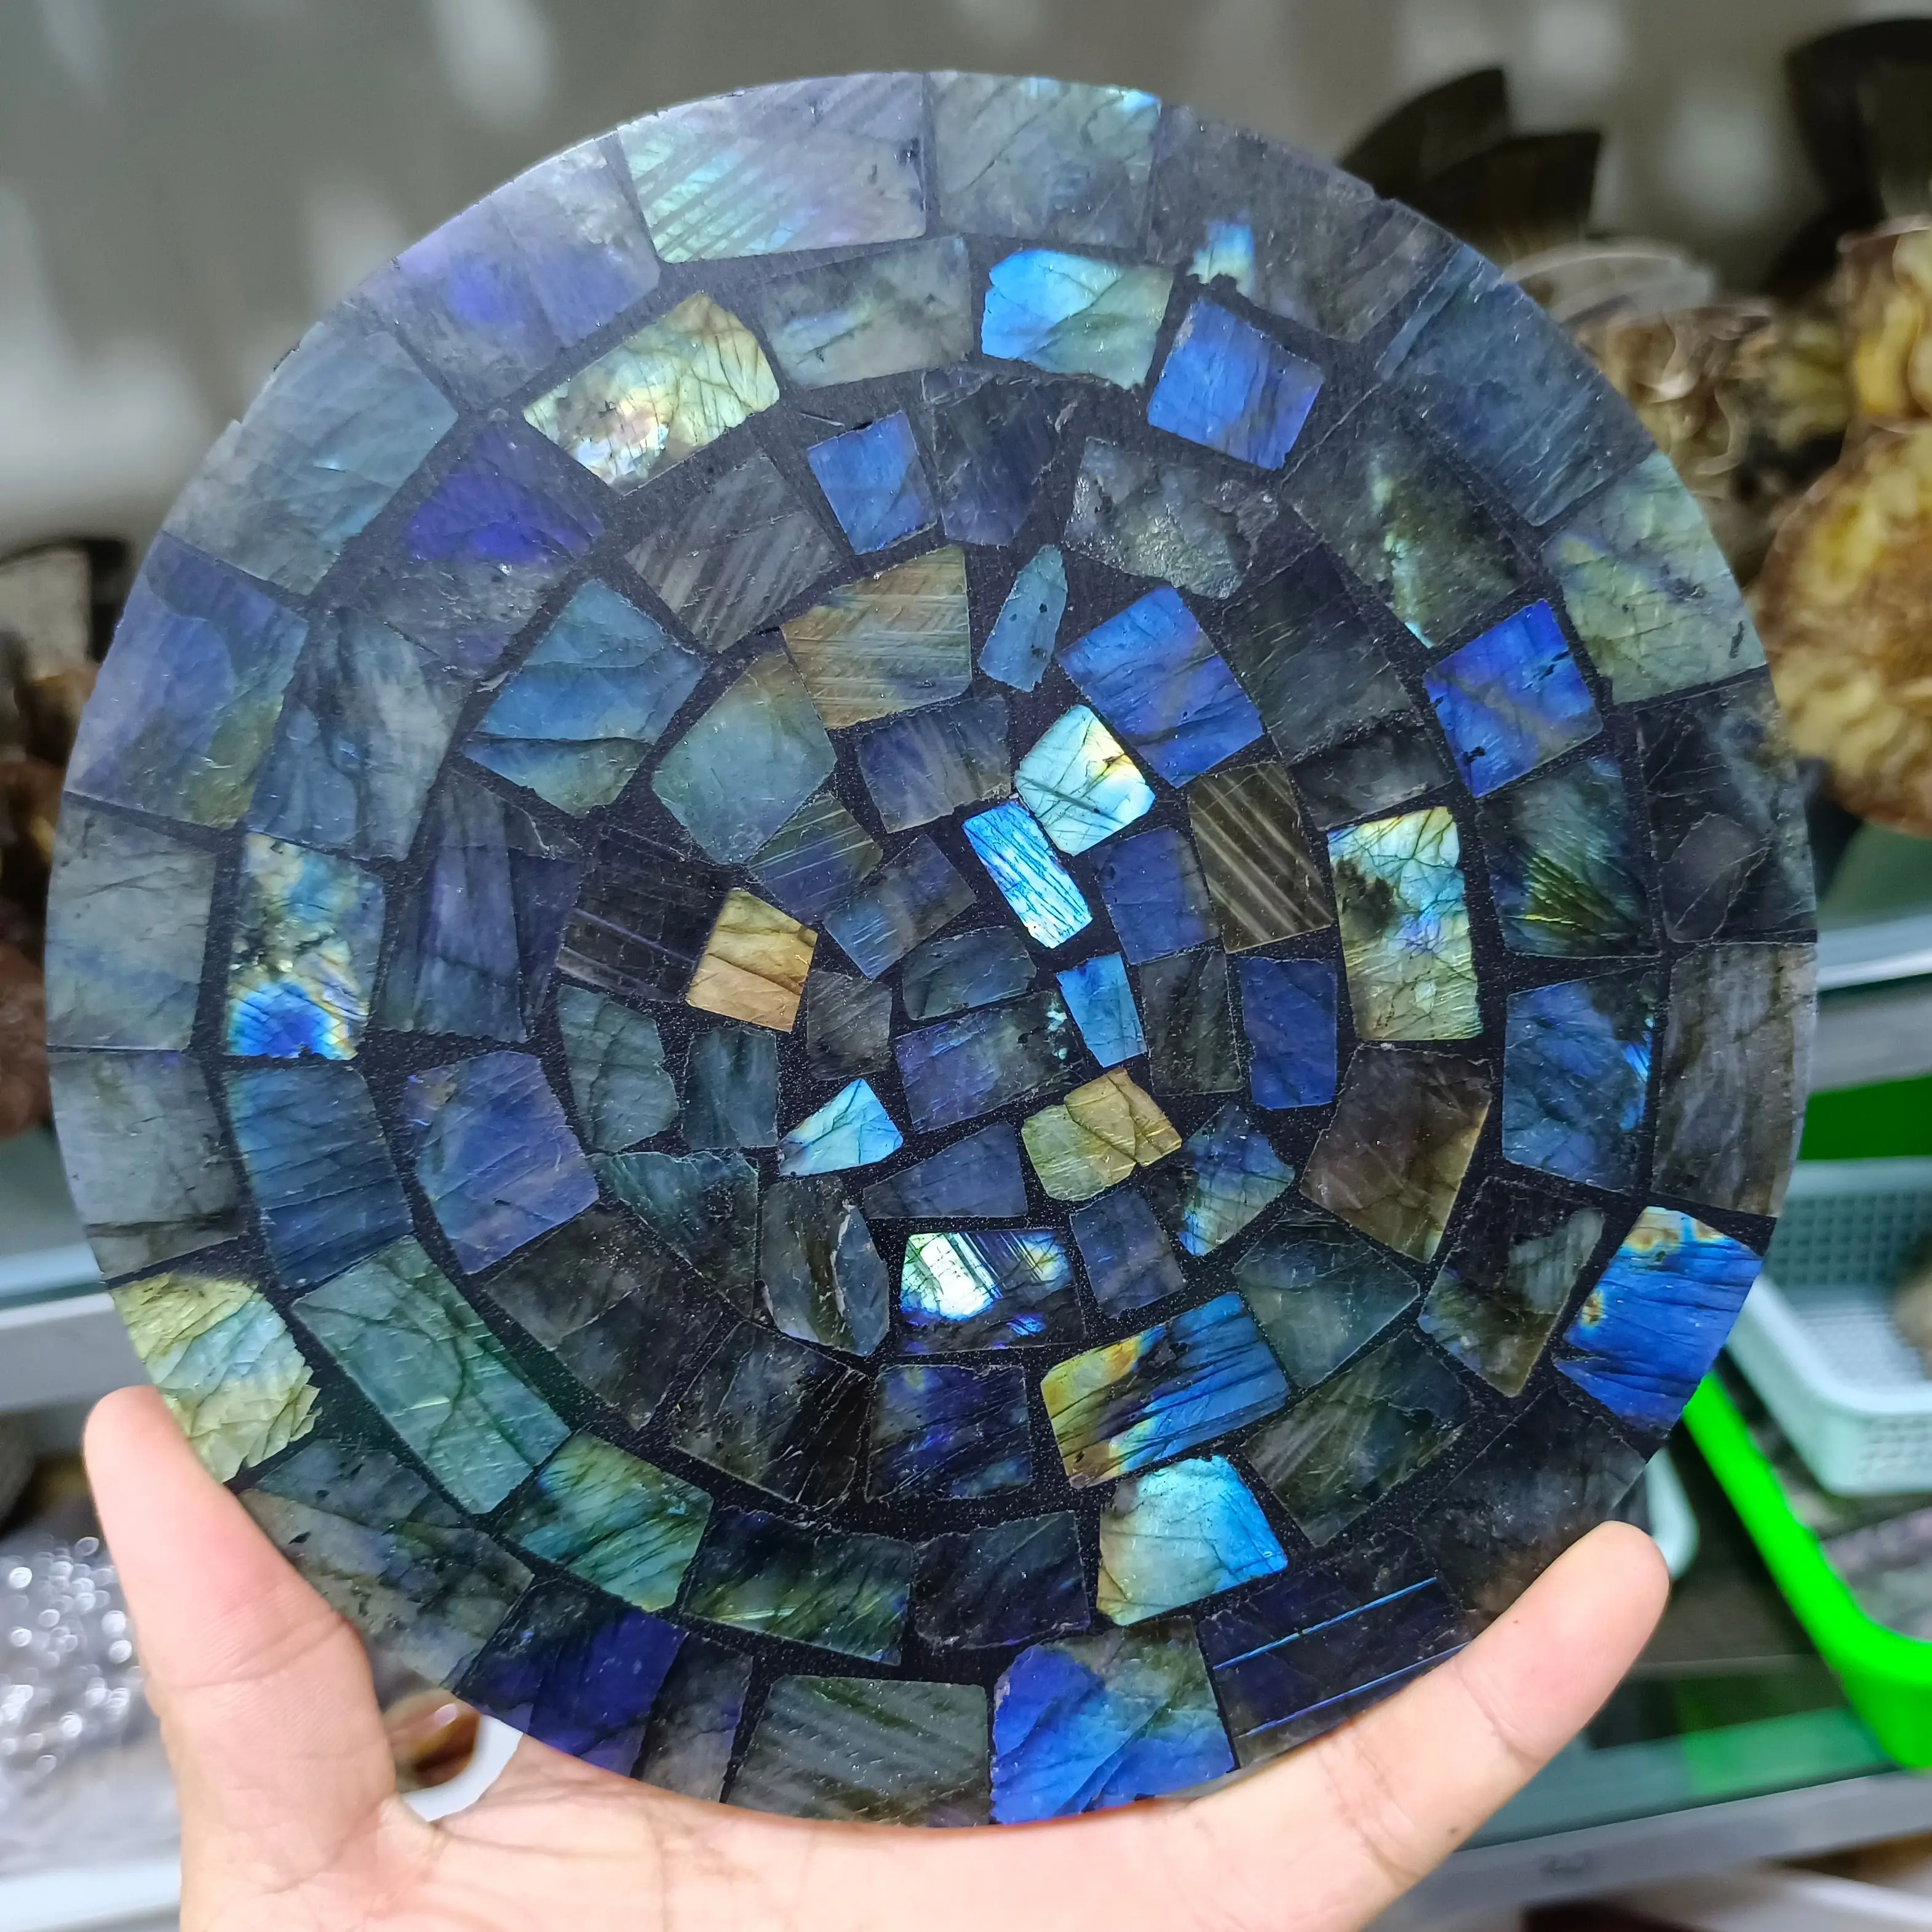 

Magical Natural Pull Feldspar Quartz Crystal Disc Blue Moonlight Stone Play Collection Mineral Healing Degaussing Gem + bracket